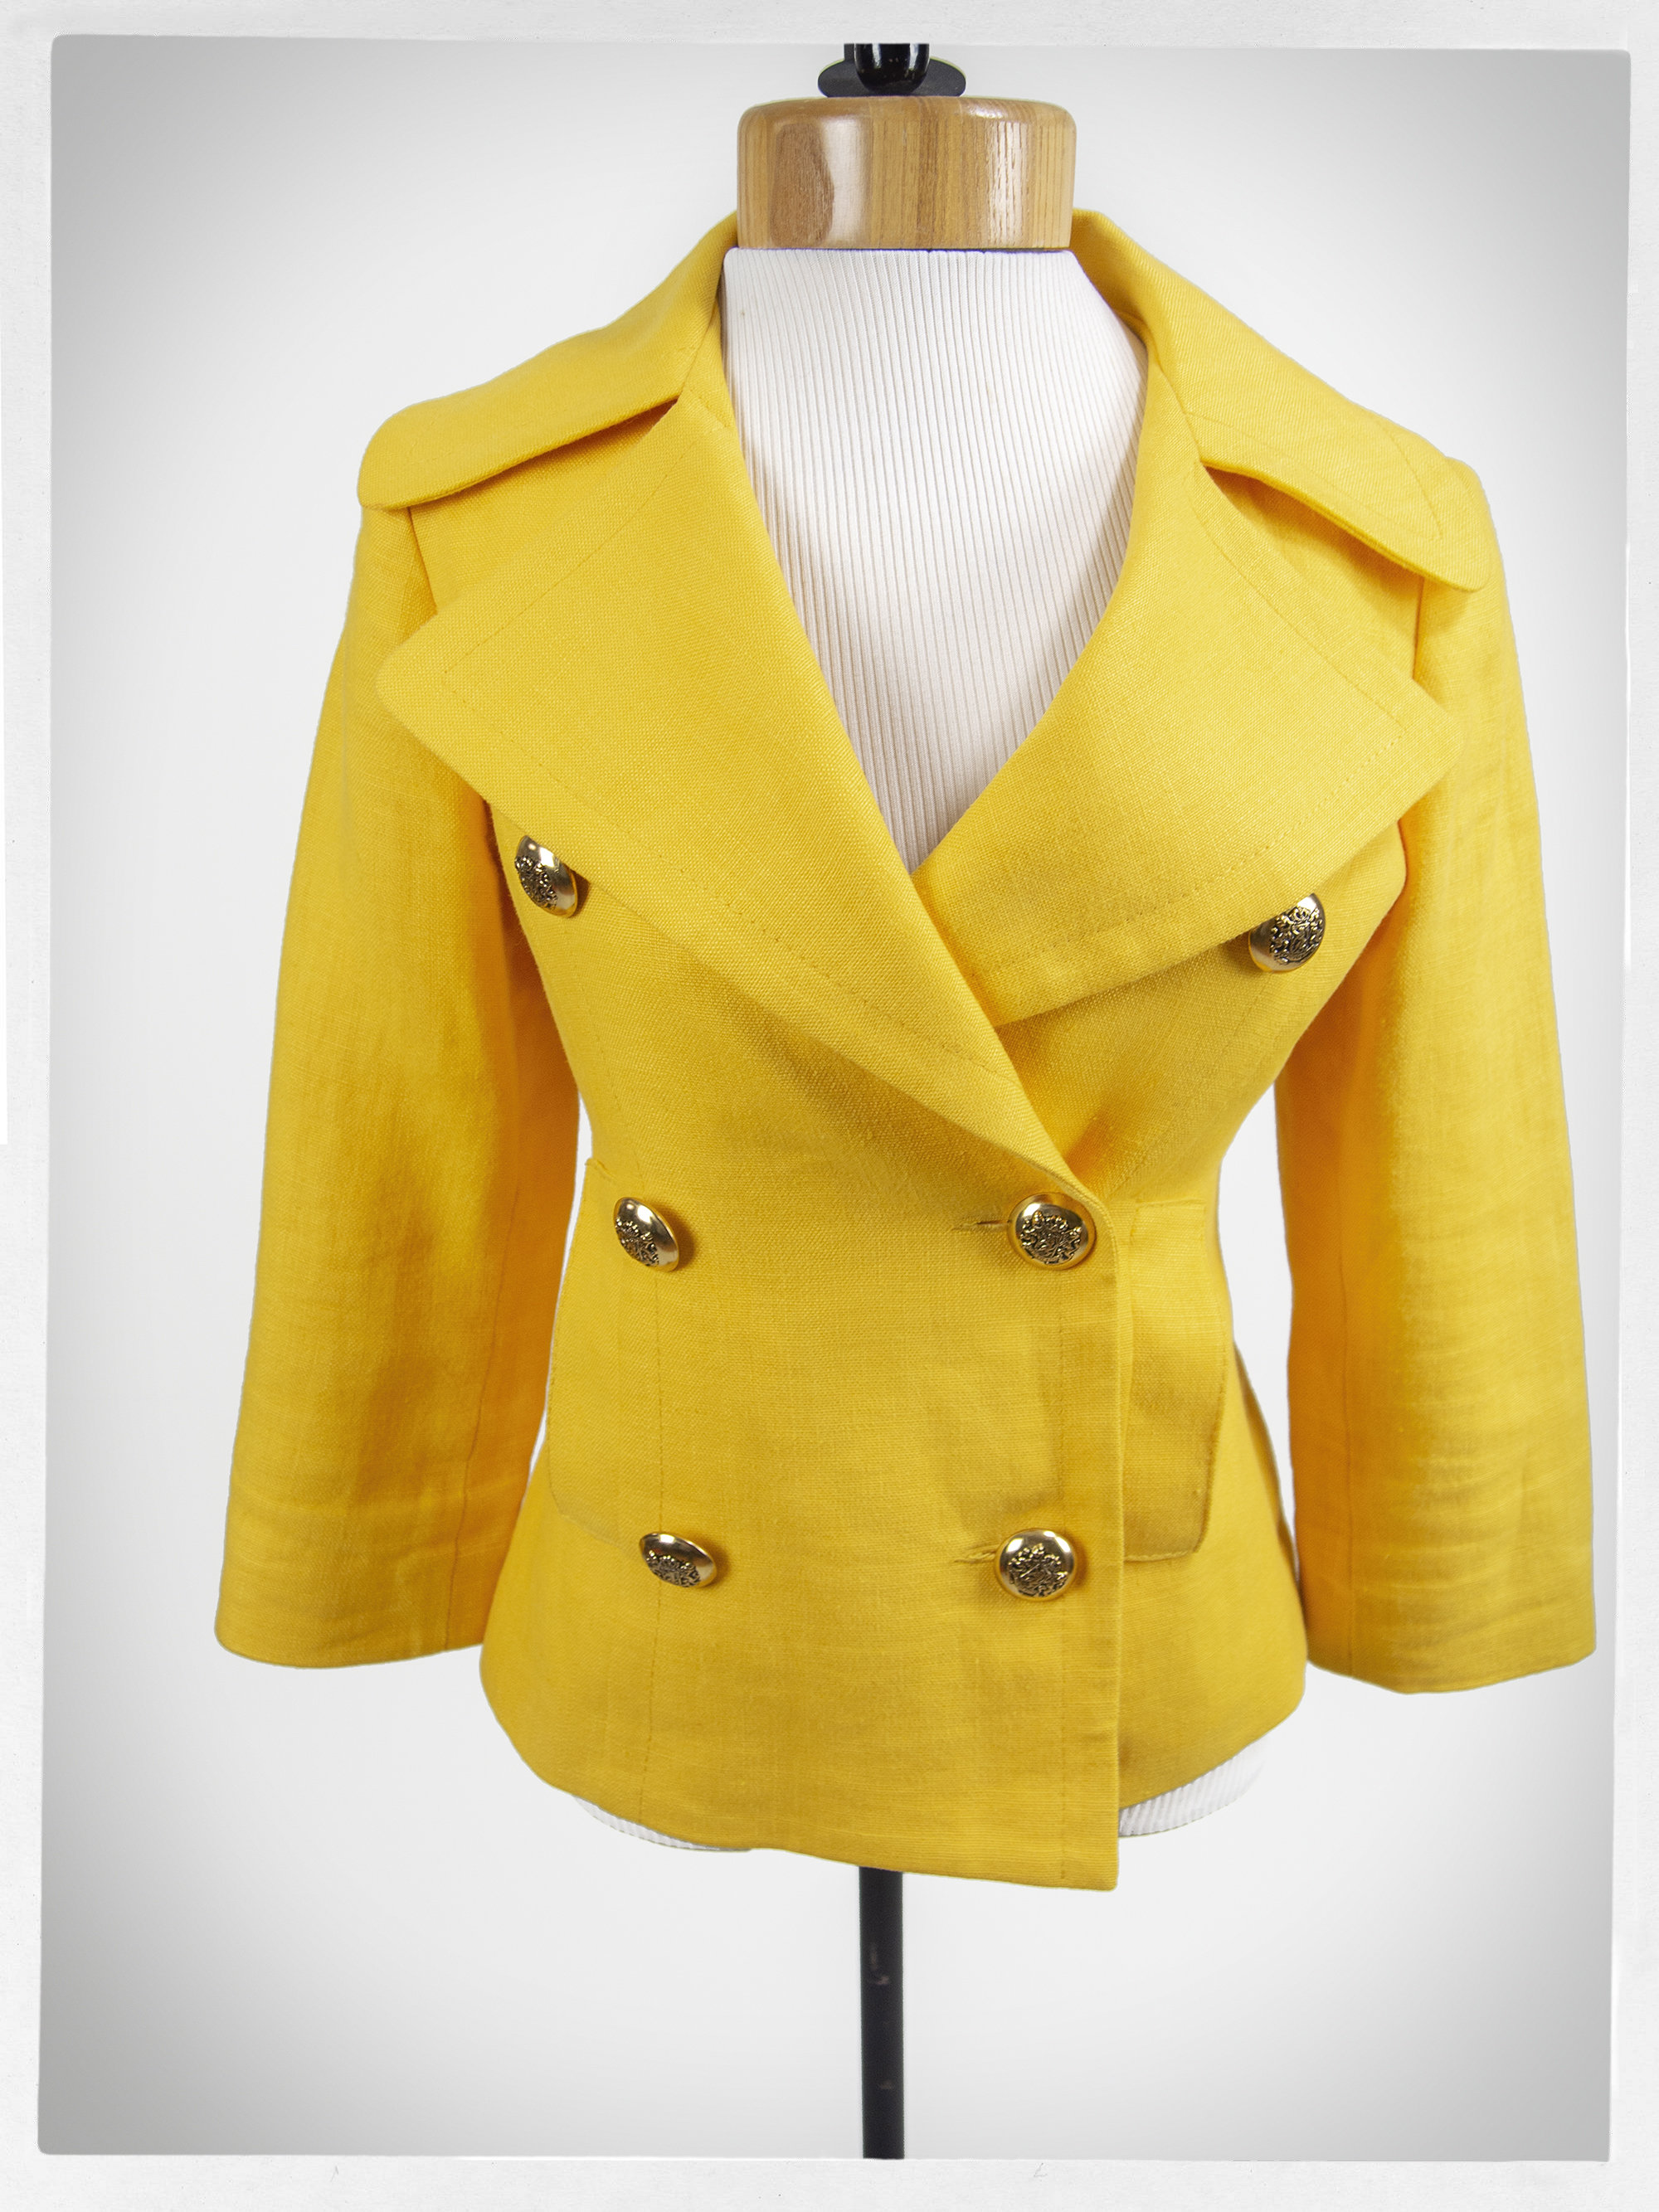 60s Style Blazer Yellow Linen Jacket Vintage Fashion | Etsy